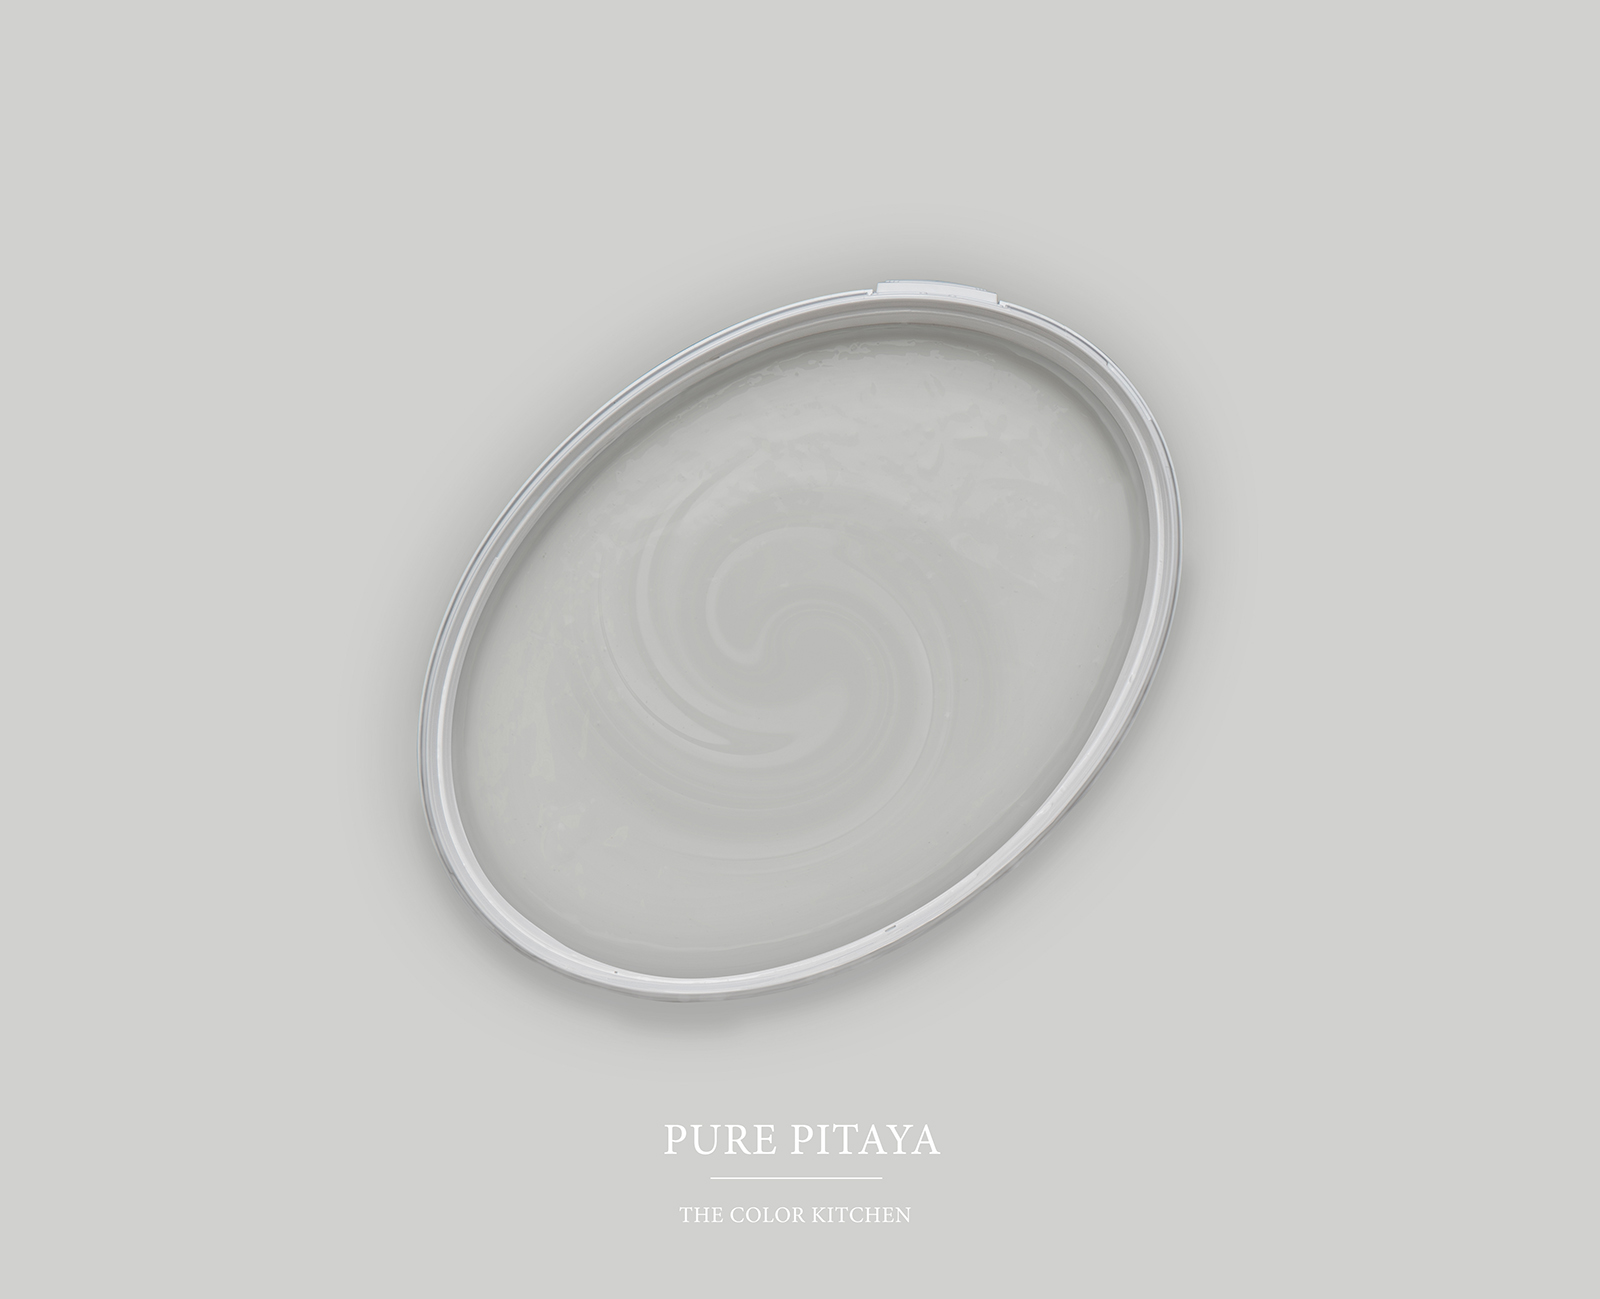         Wandfarbe TCK1003 »Pure Pitaya« in bläulichem Grau – 2,5 Liter
    